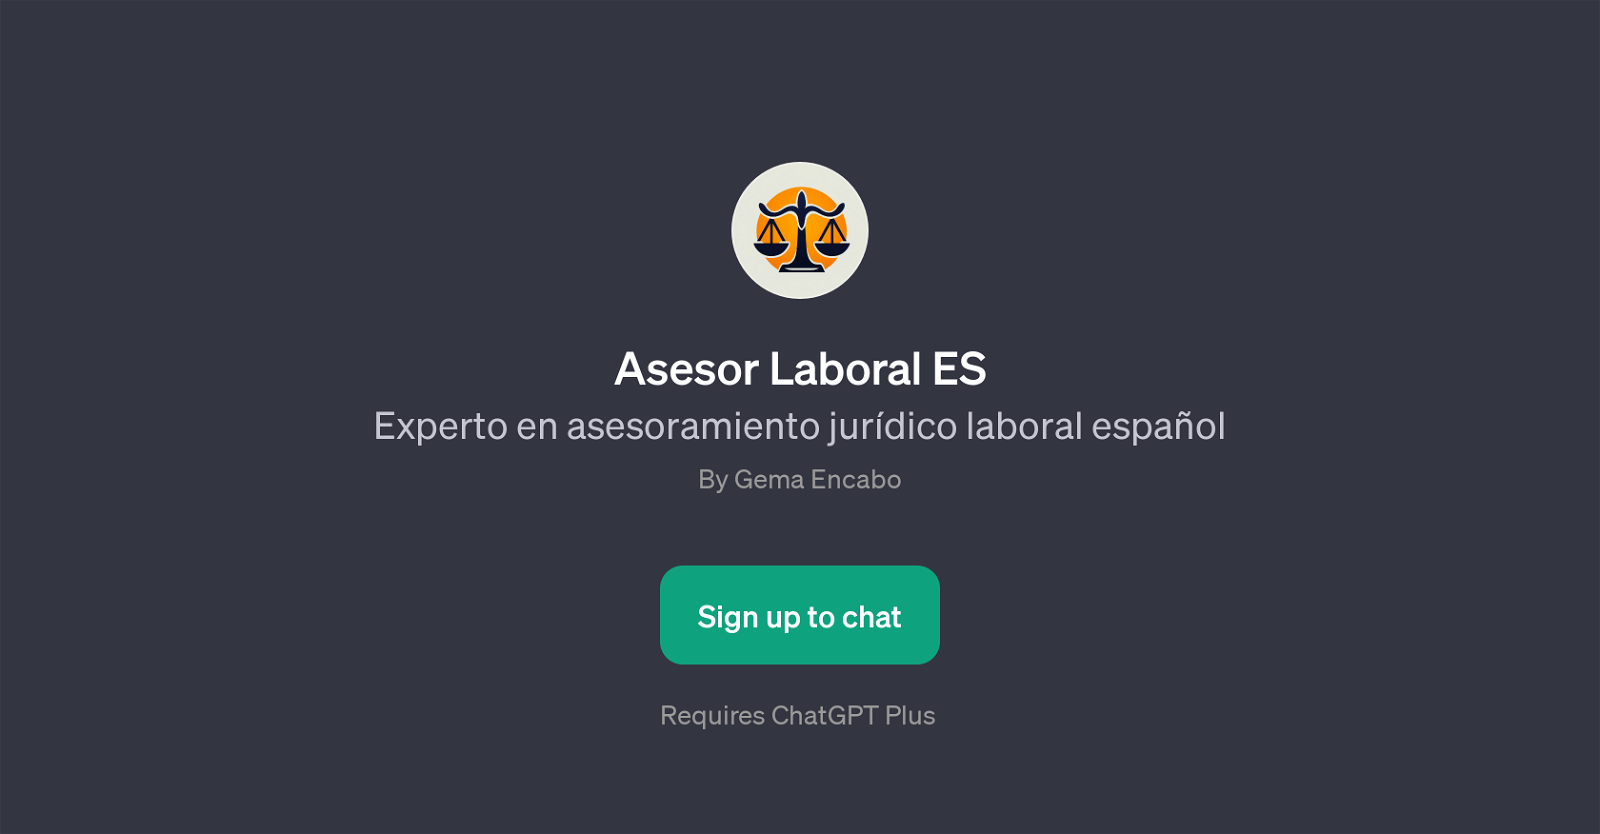 Asesor Laboral ES website